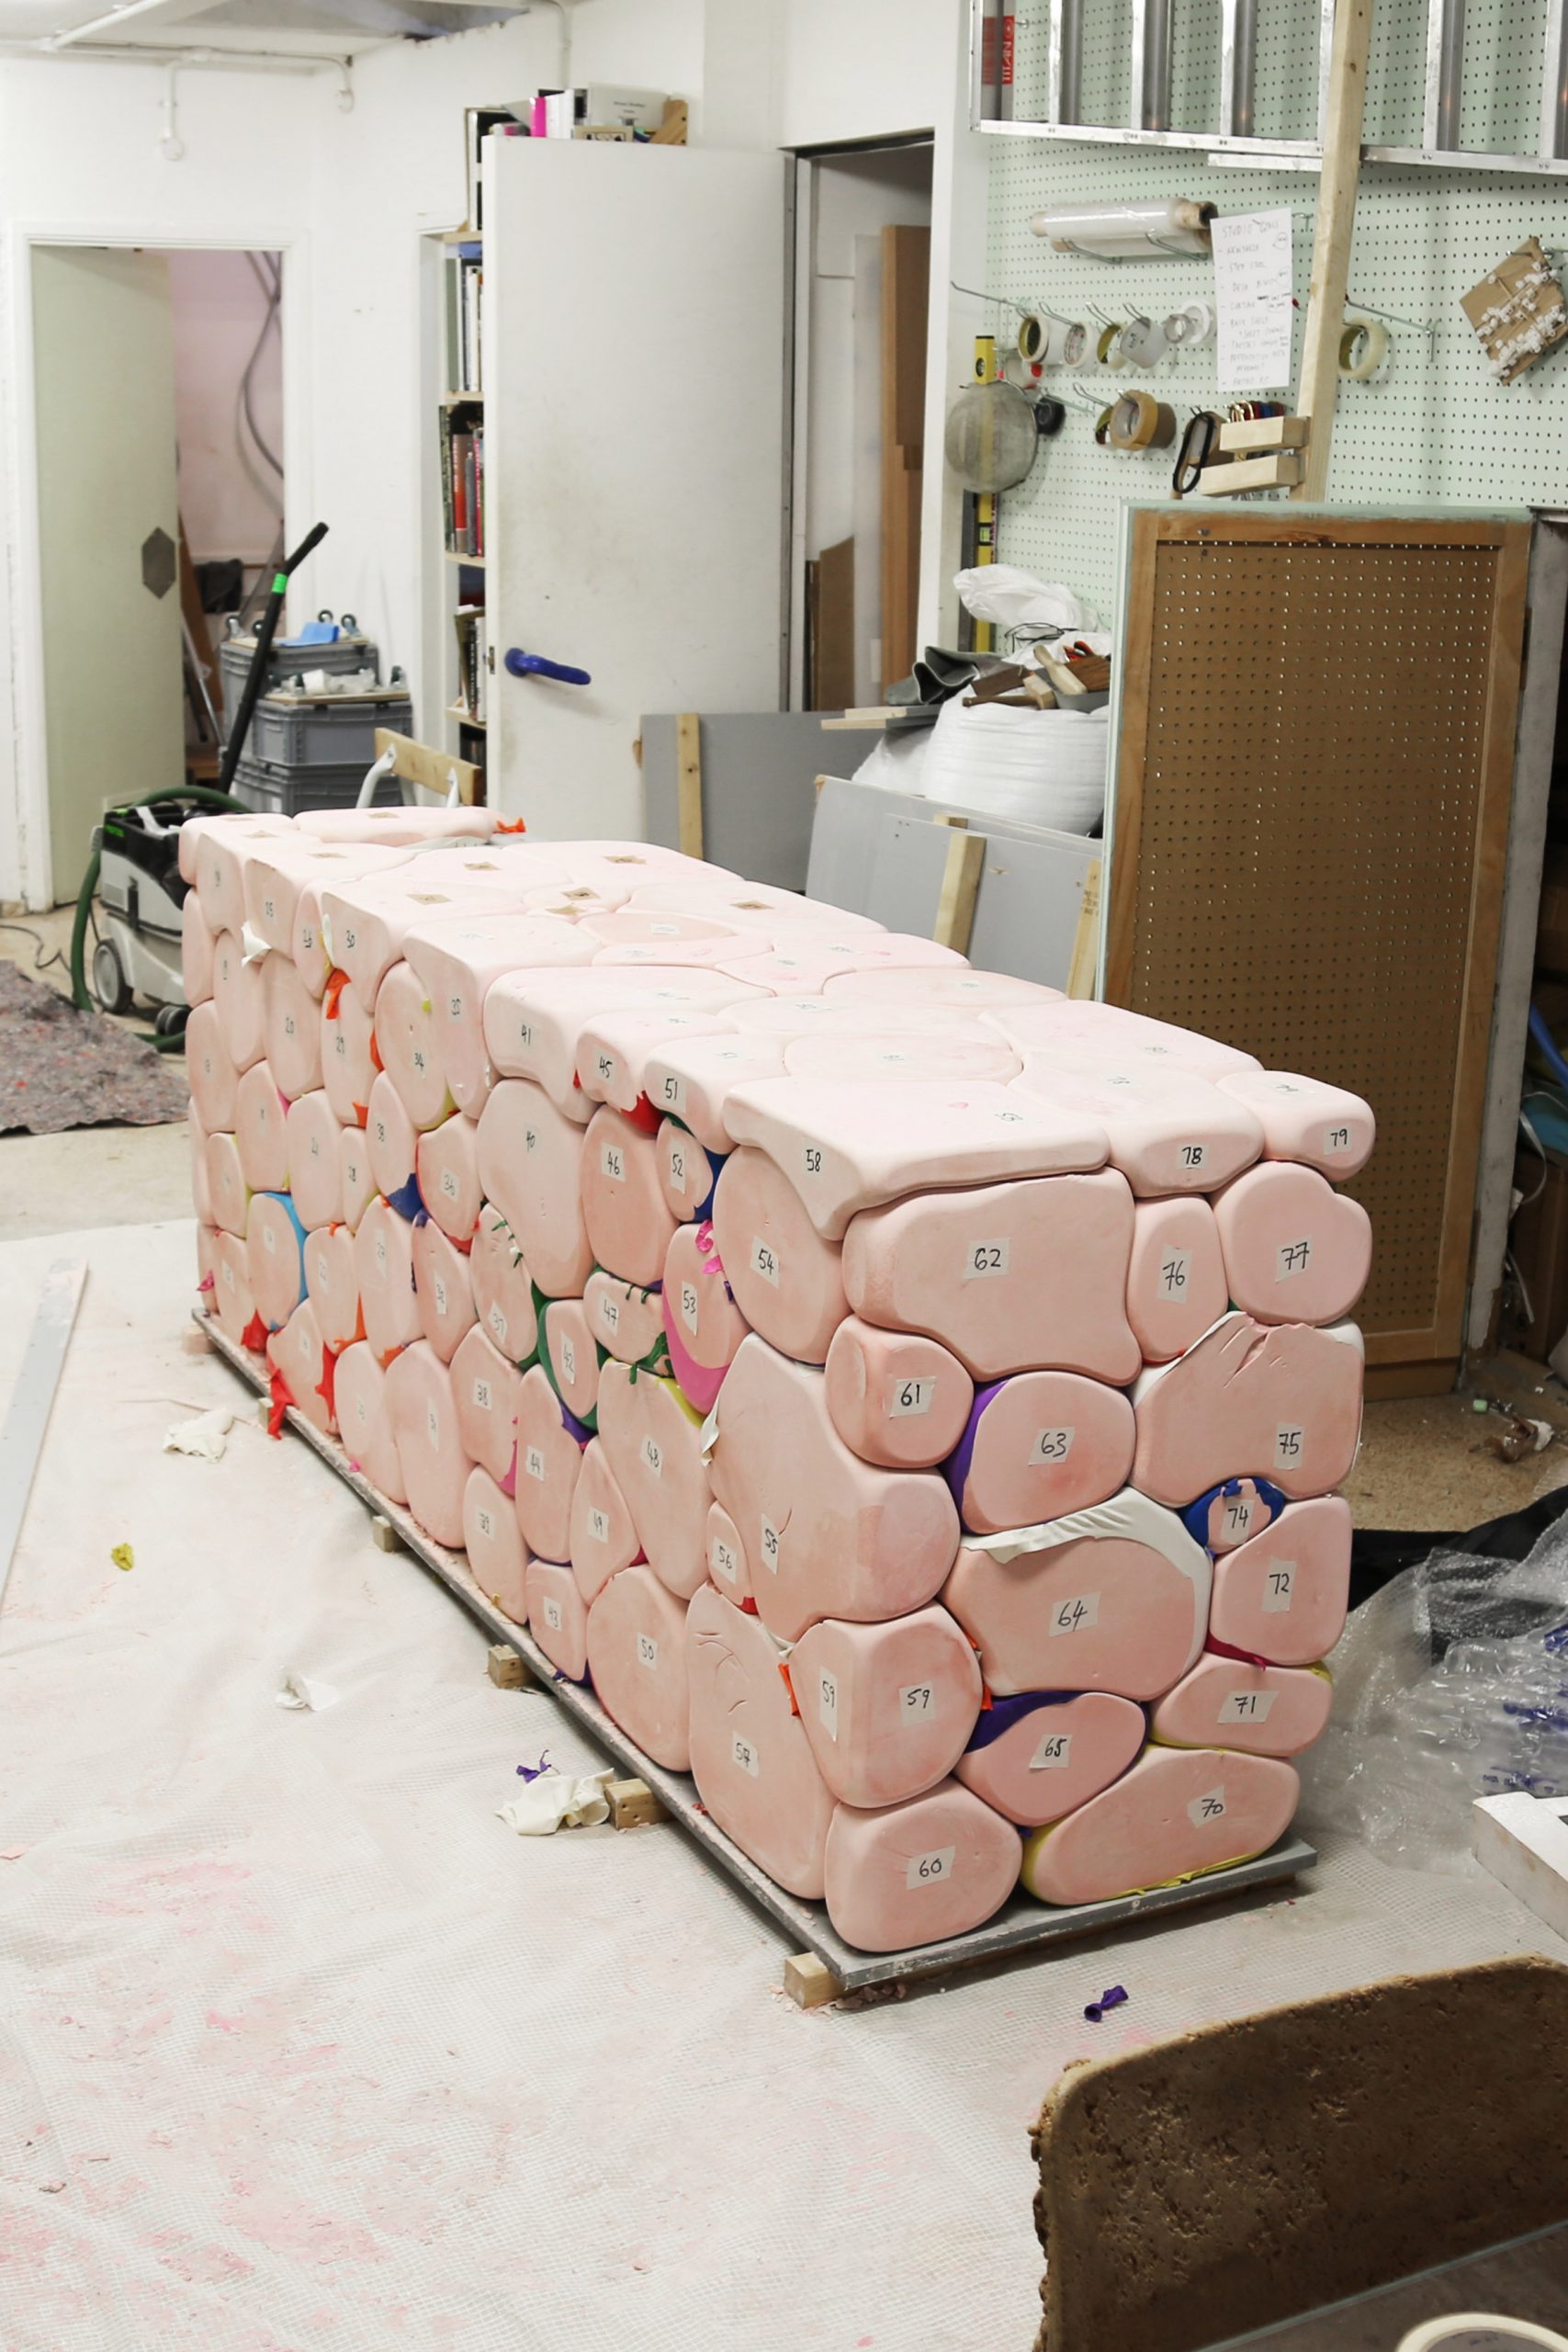 Hem reveals design process behind Soft Baroque's Puffy Brick counter